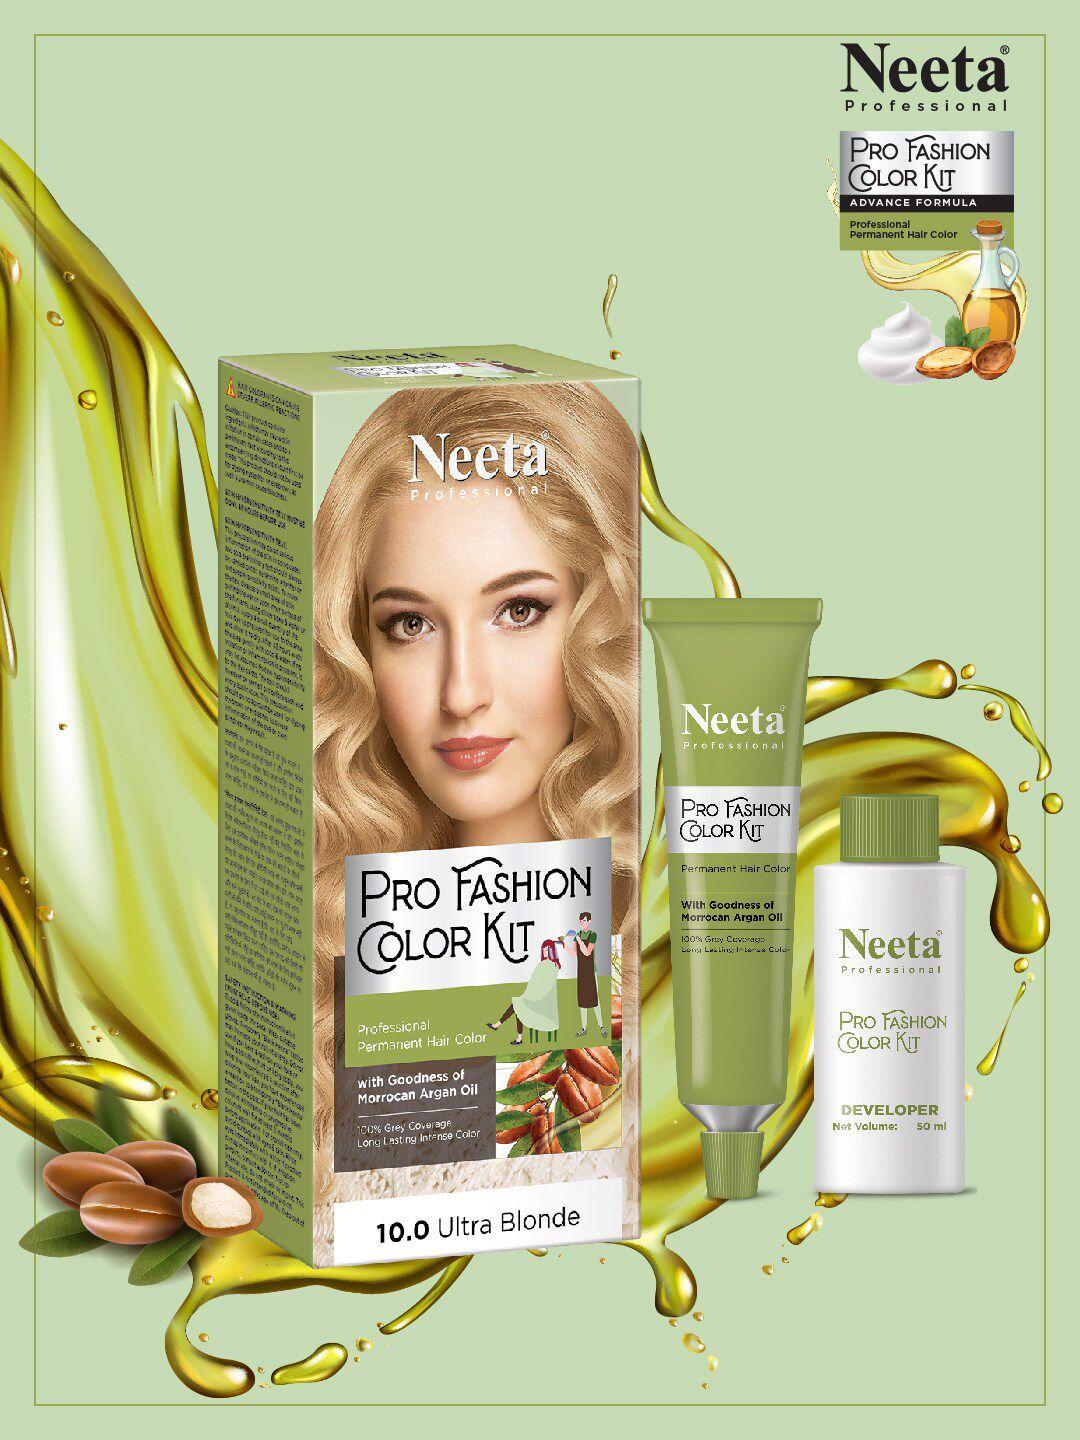 neeta professional pro fashion permanent hair color kit 100g - ultra blonde 10.0